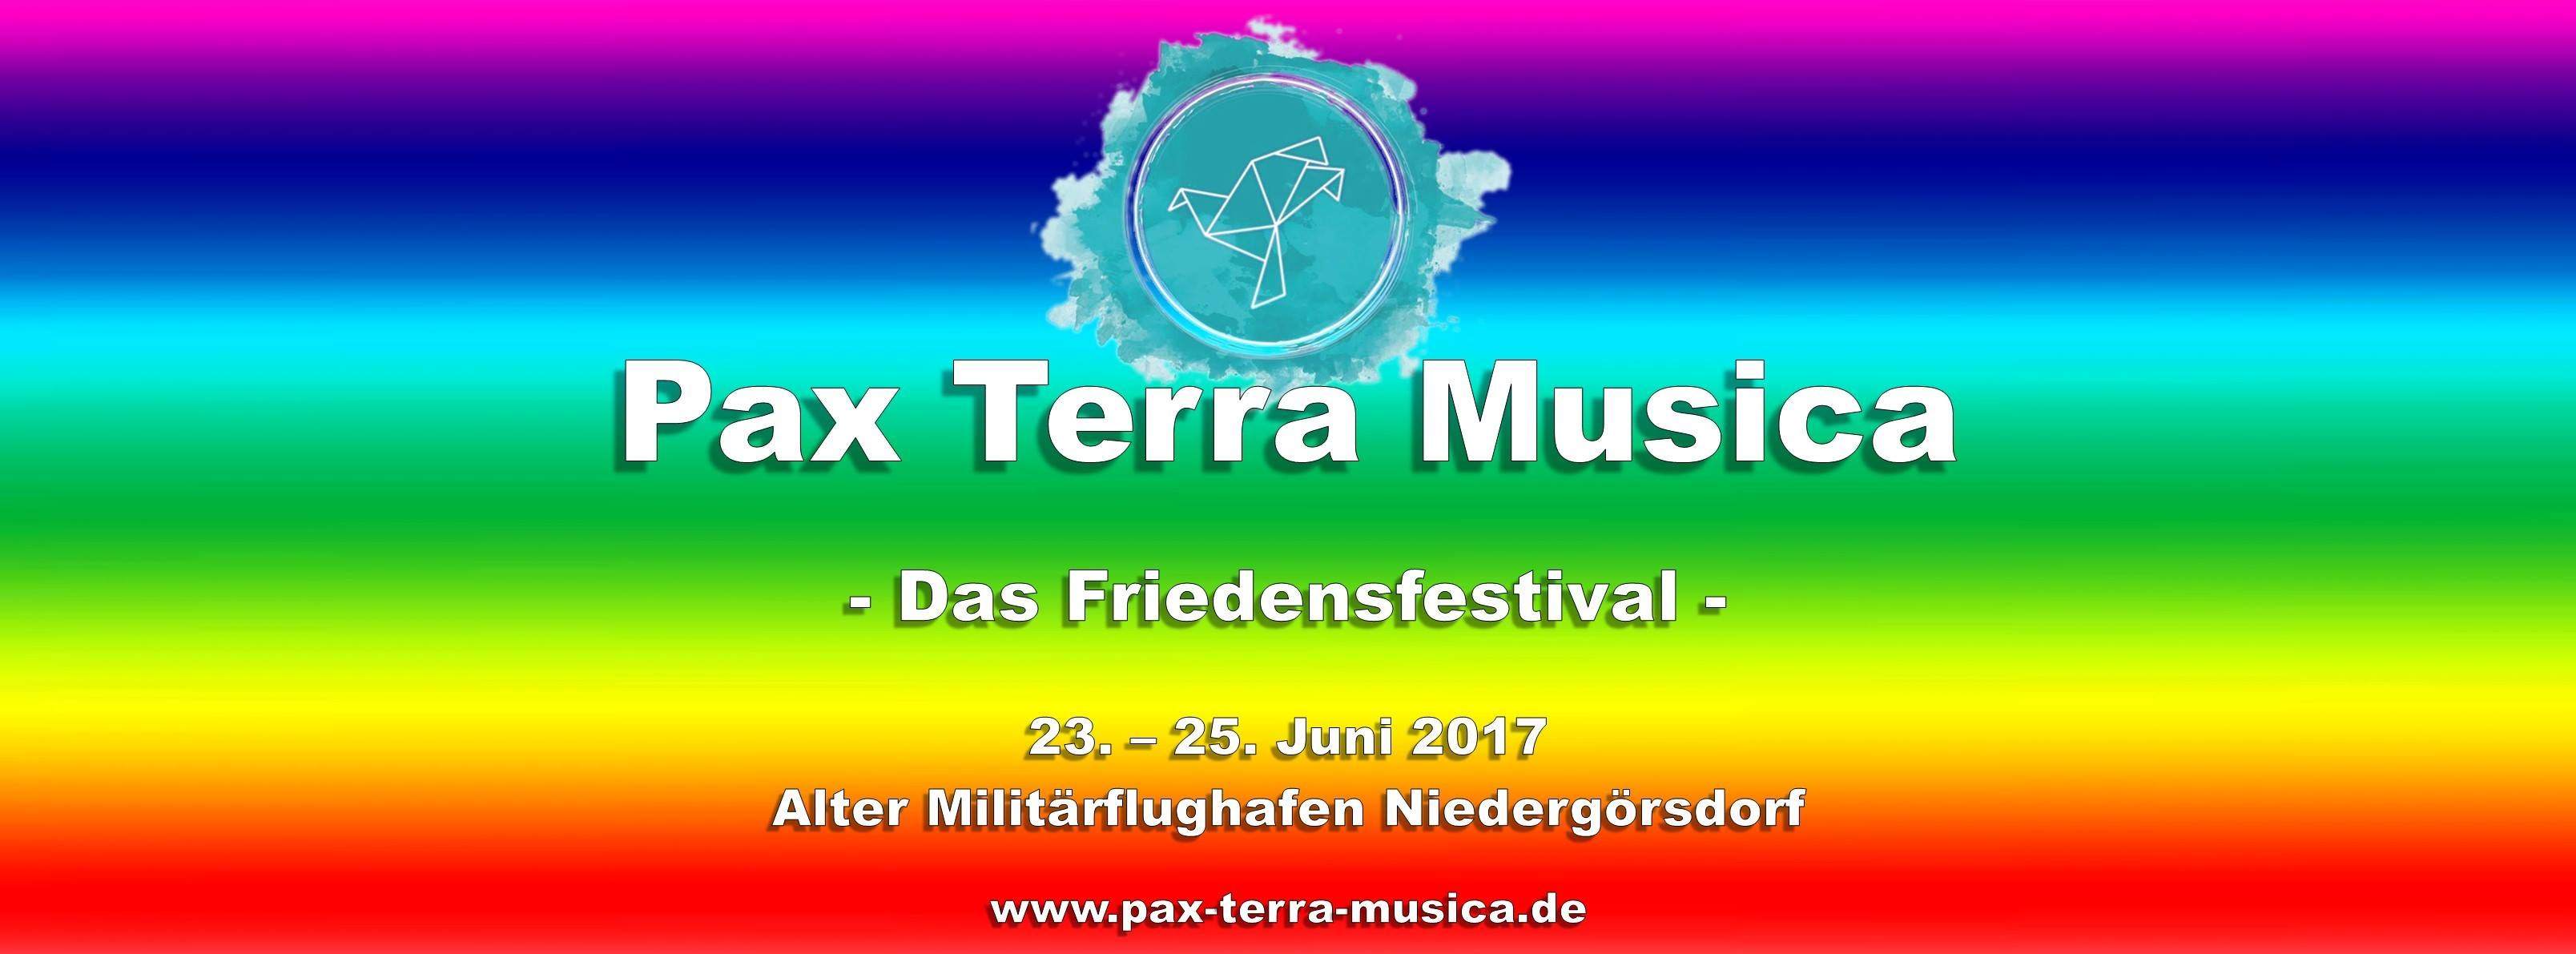 Pax Terra Musica Festival - フライヤー表